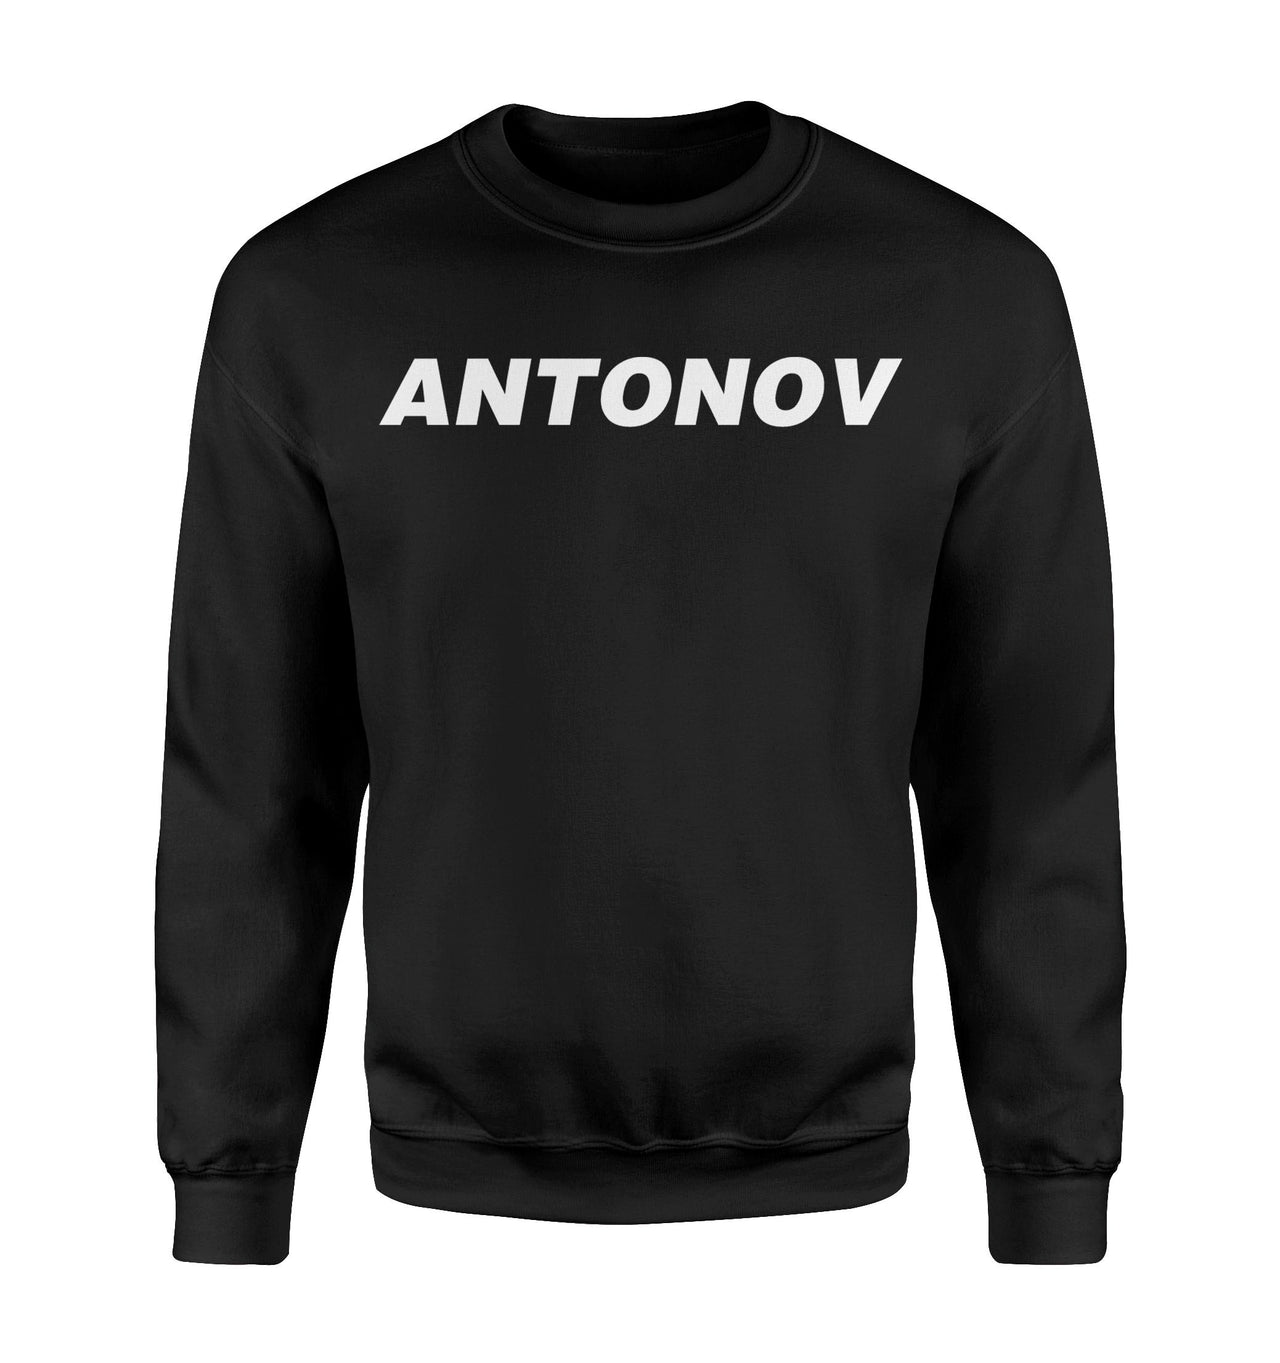 Antonov & Text Designed Sweatshirts